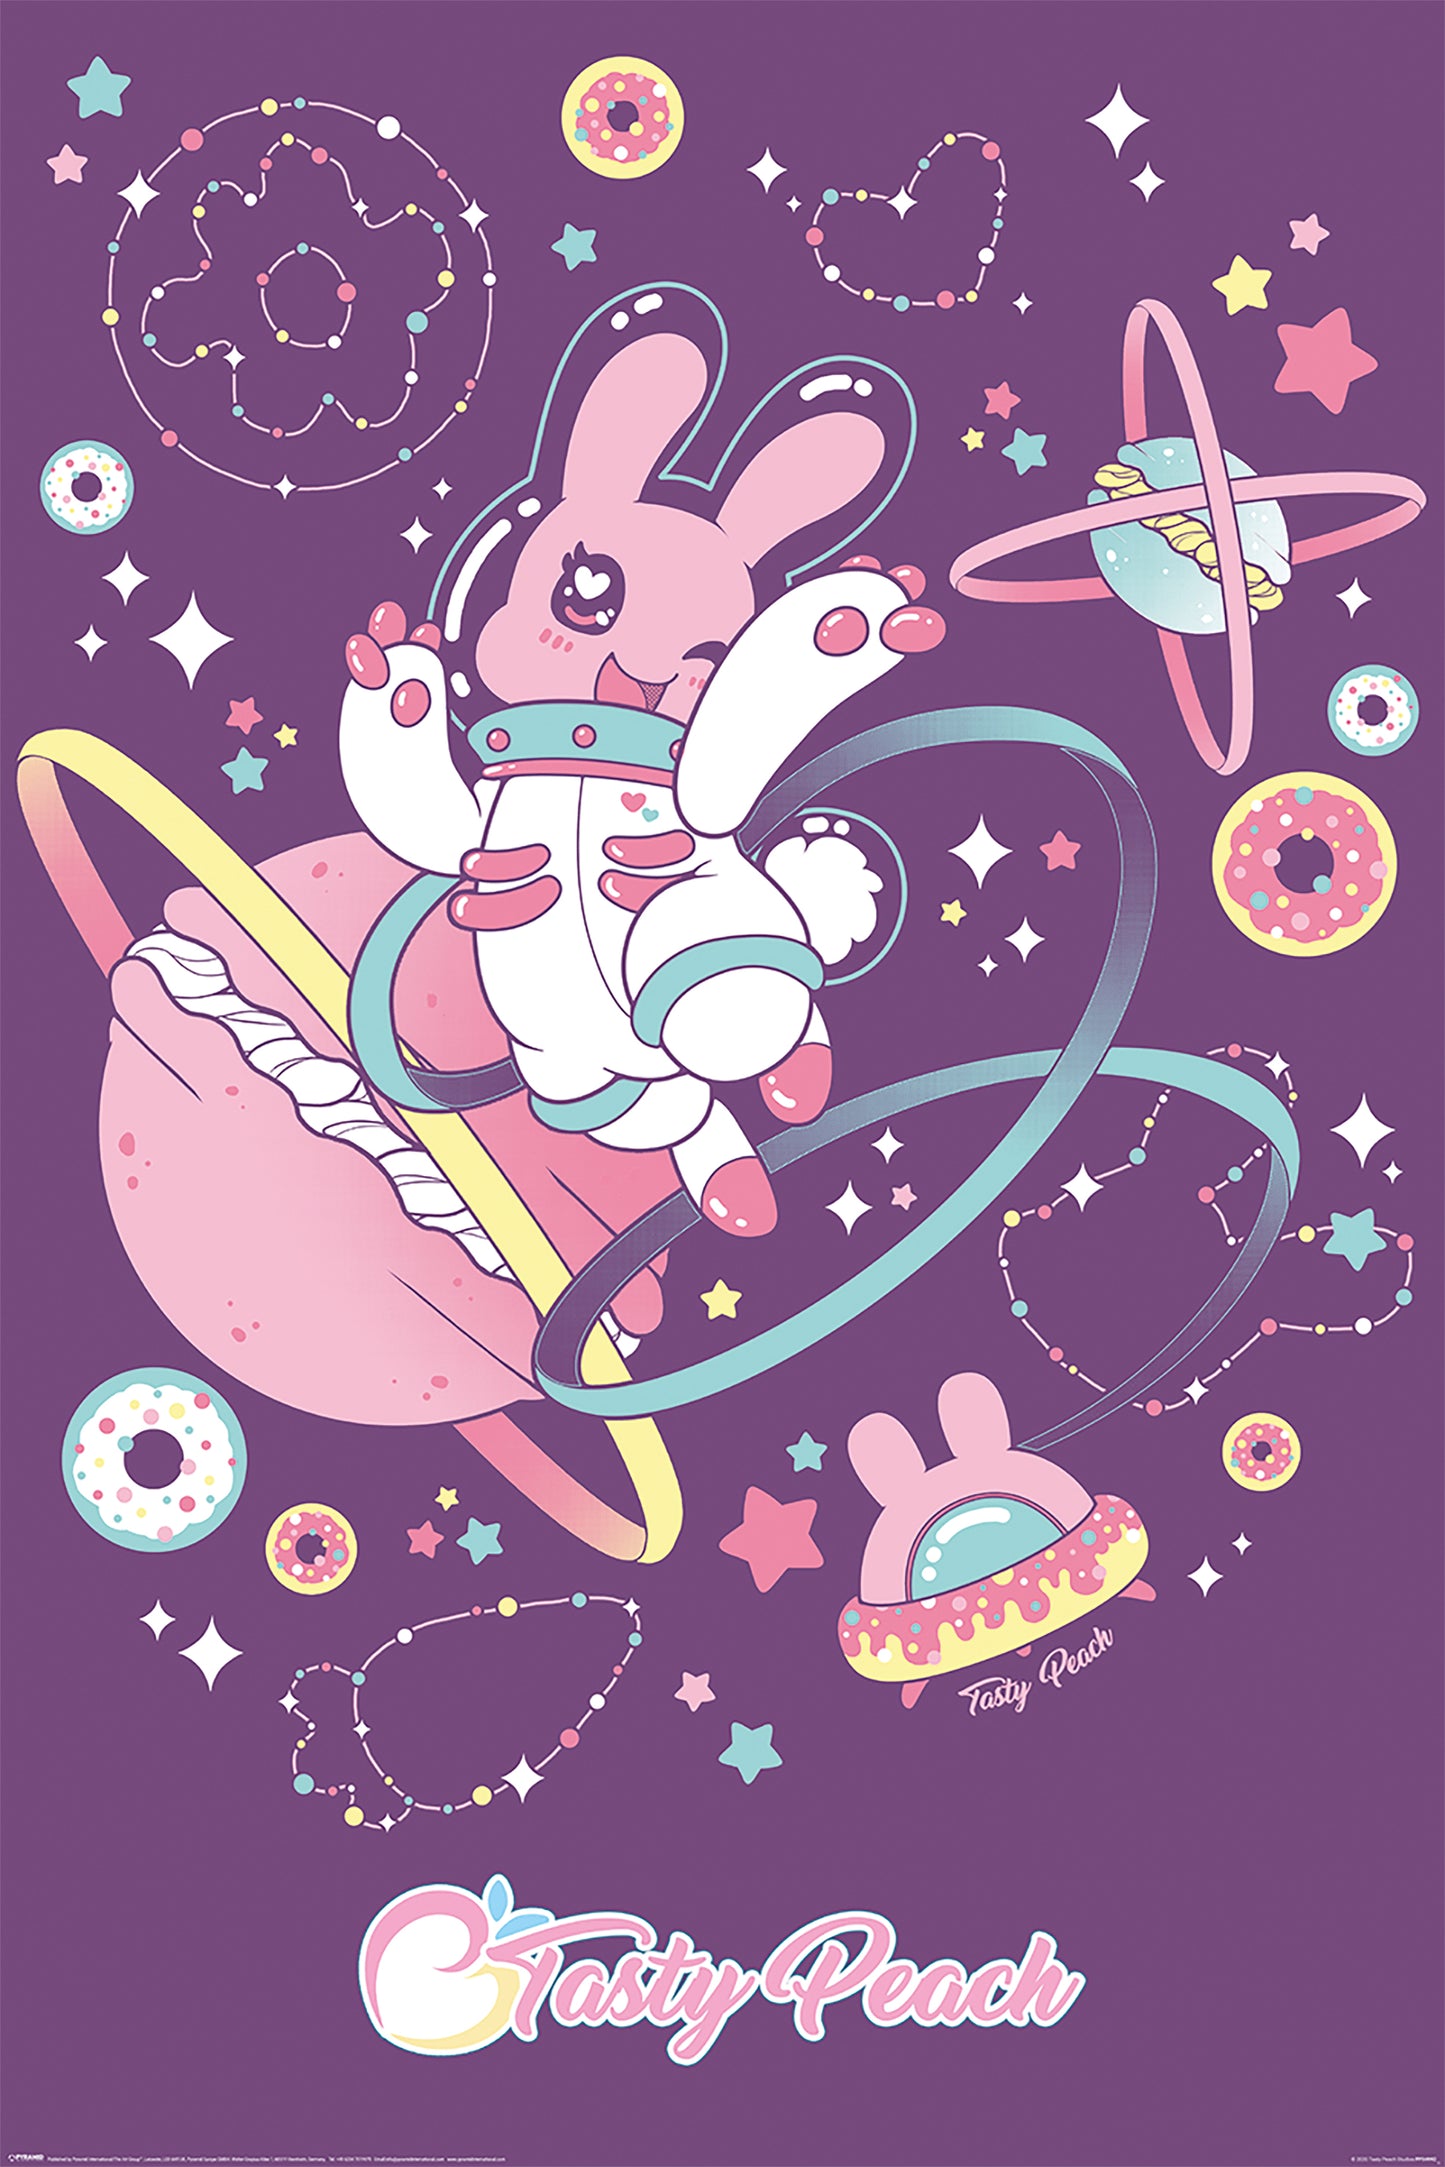 Tasty Peach (Chirii) Poster